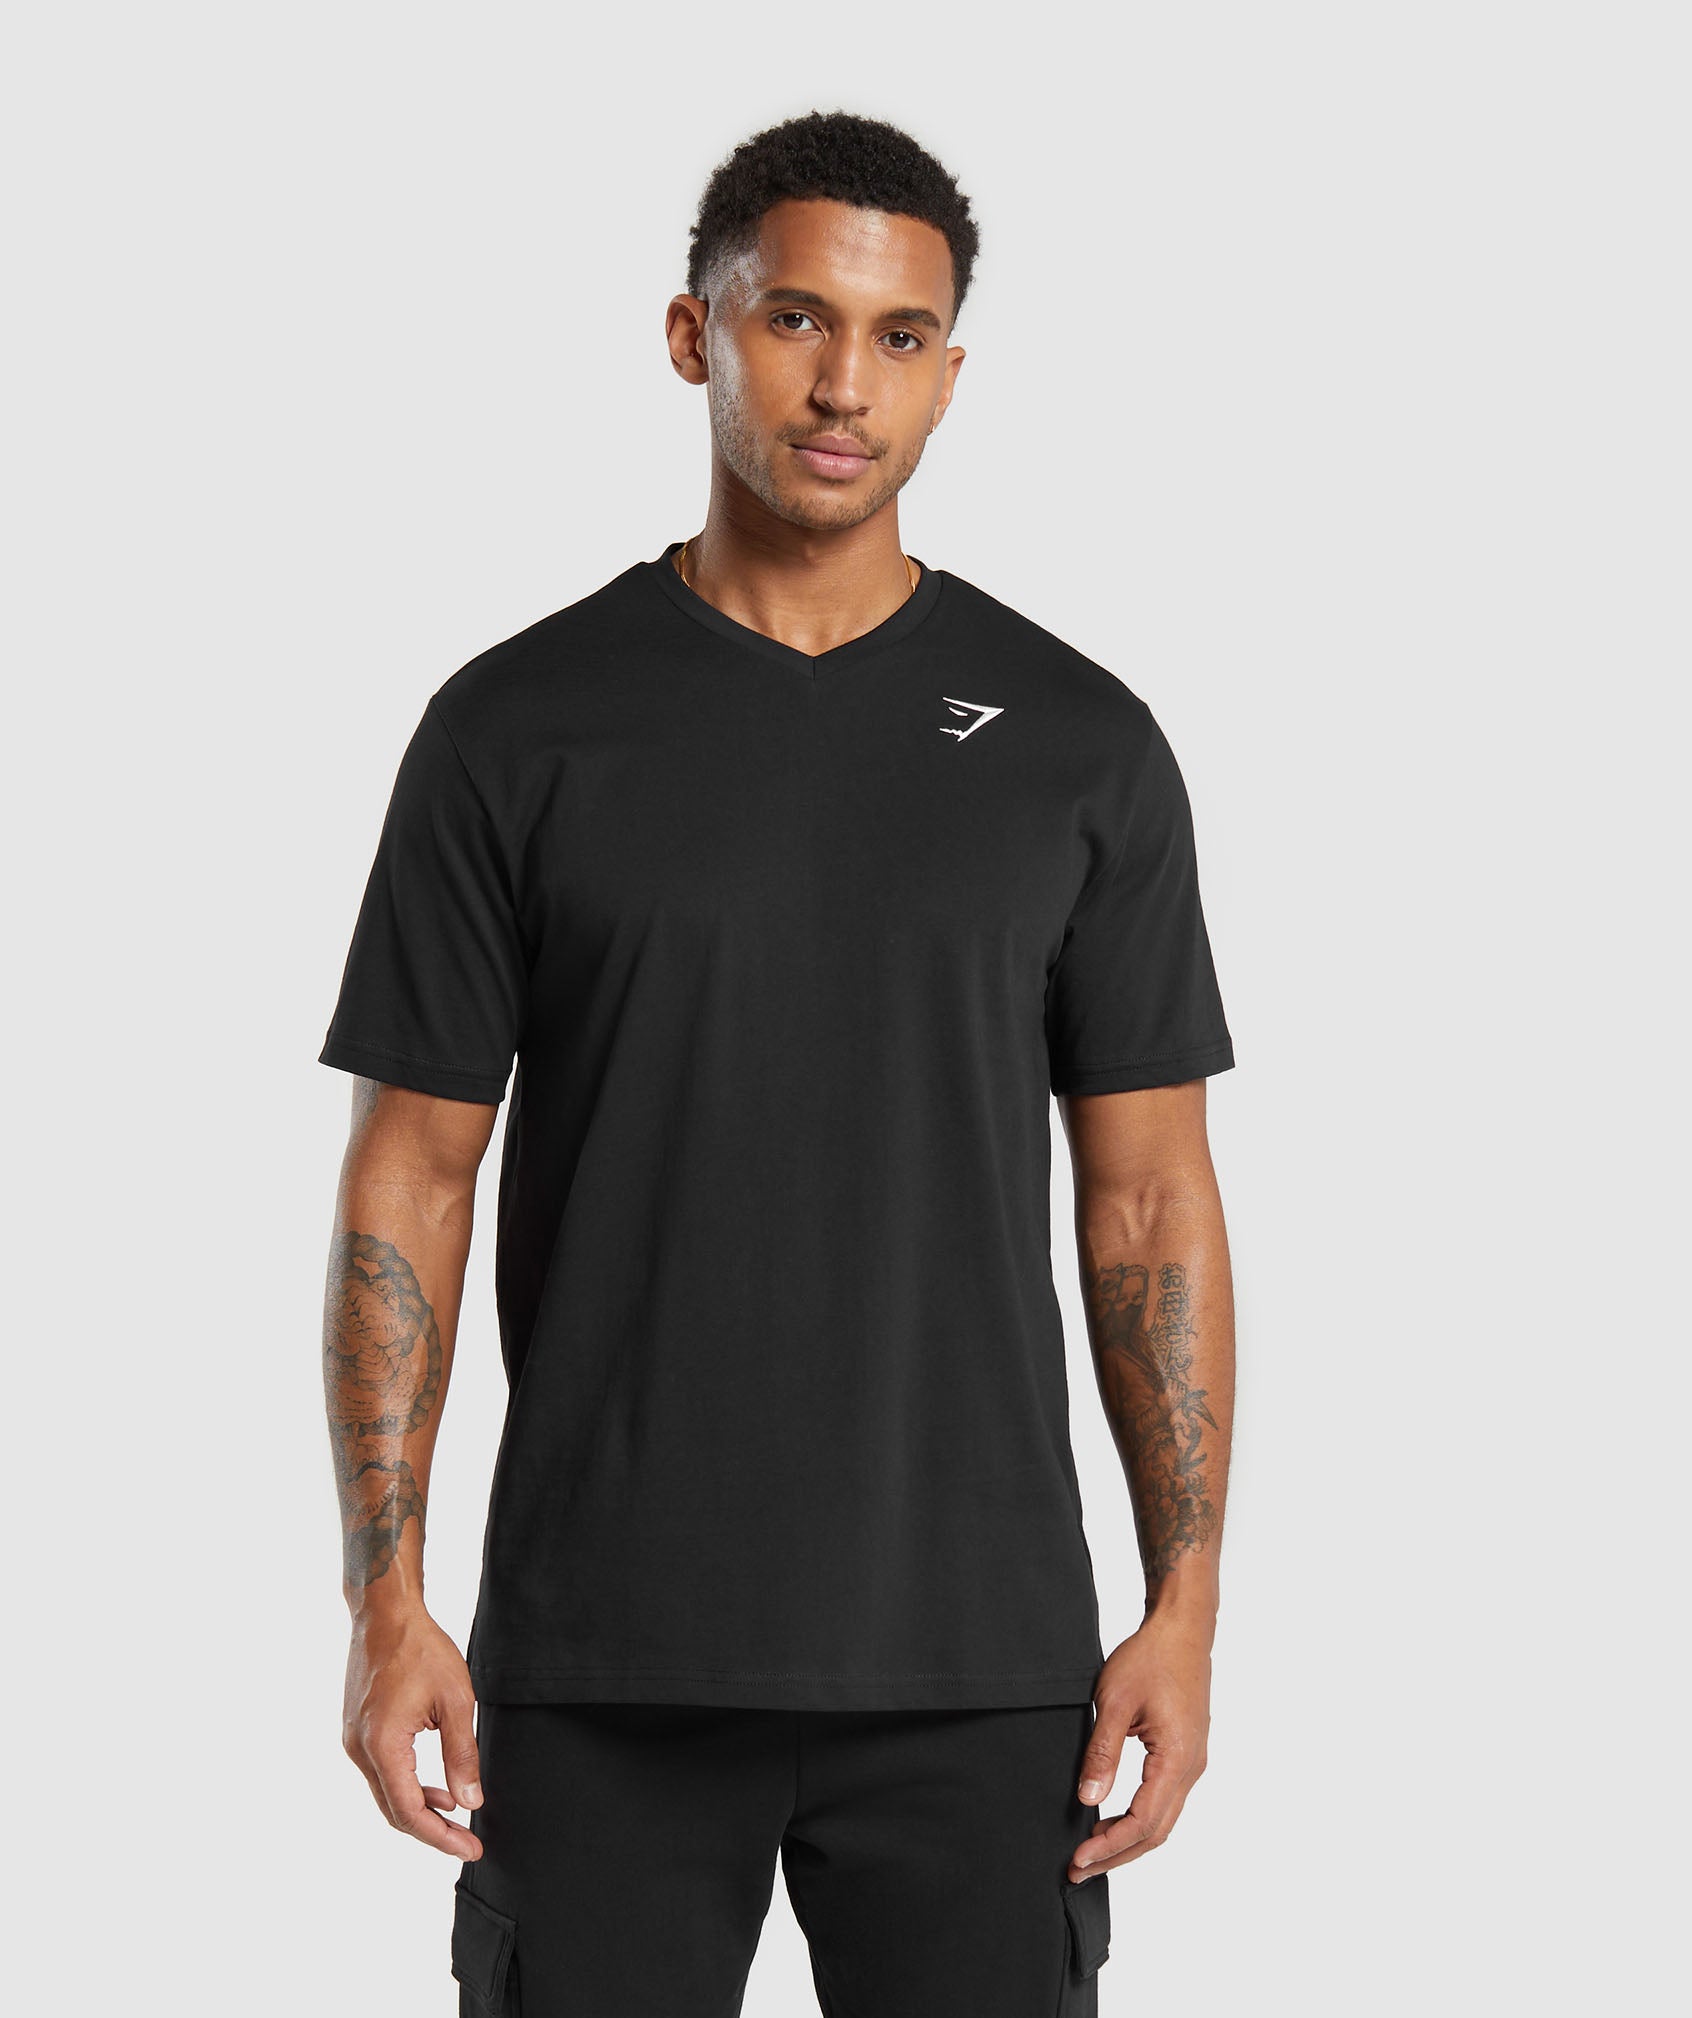 Crest V-Neck T Shirt in Black - view 1